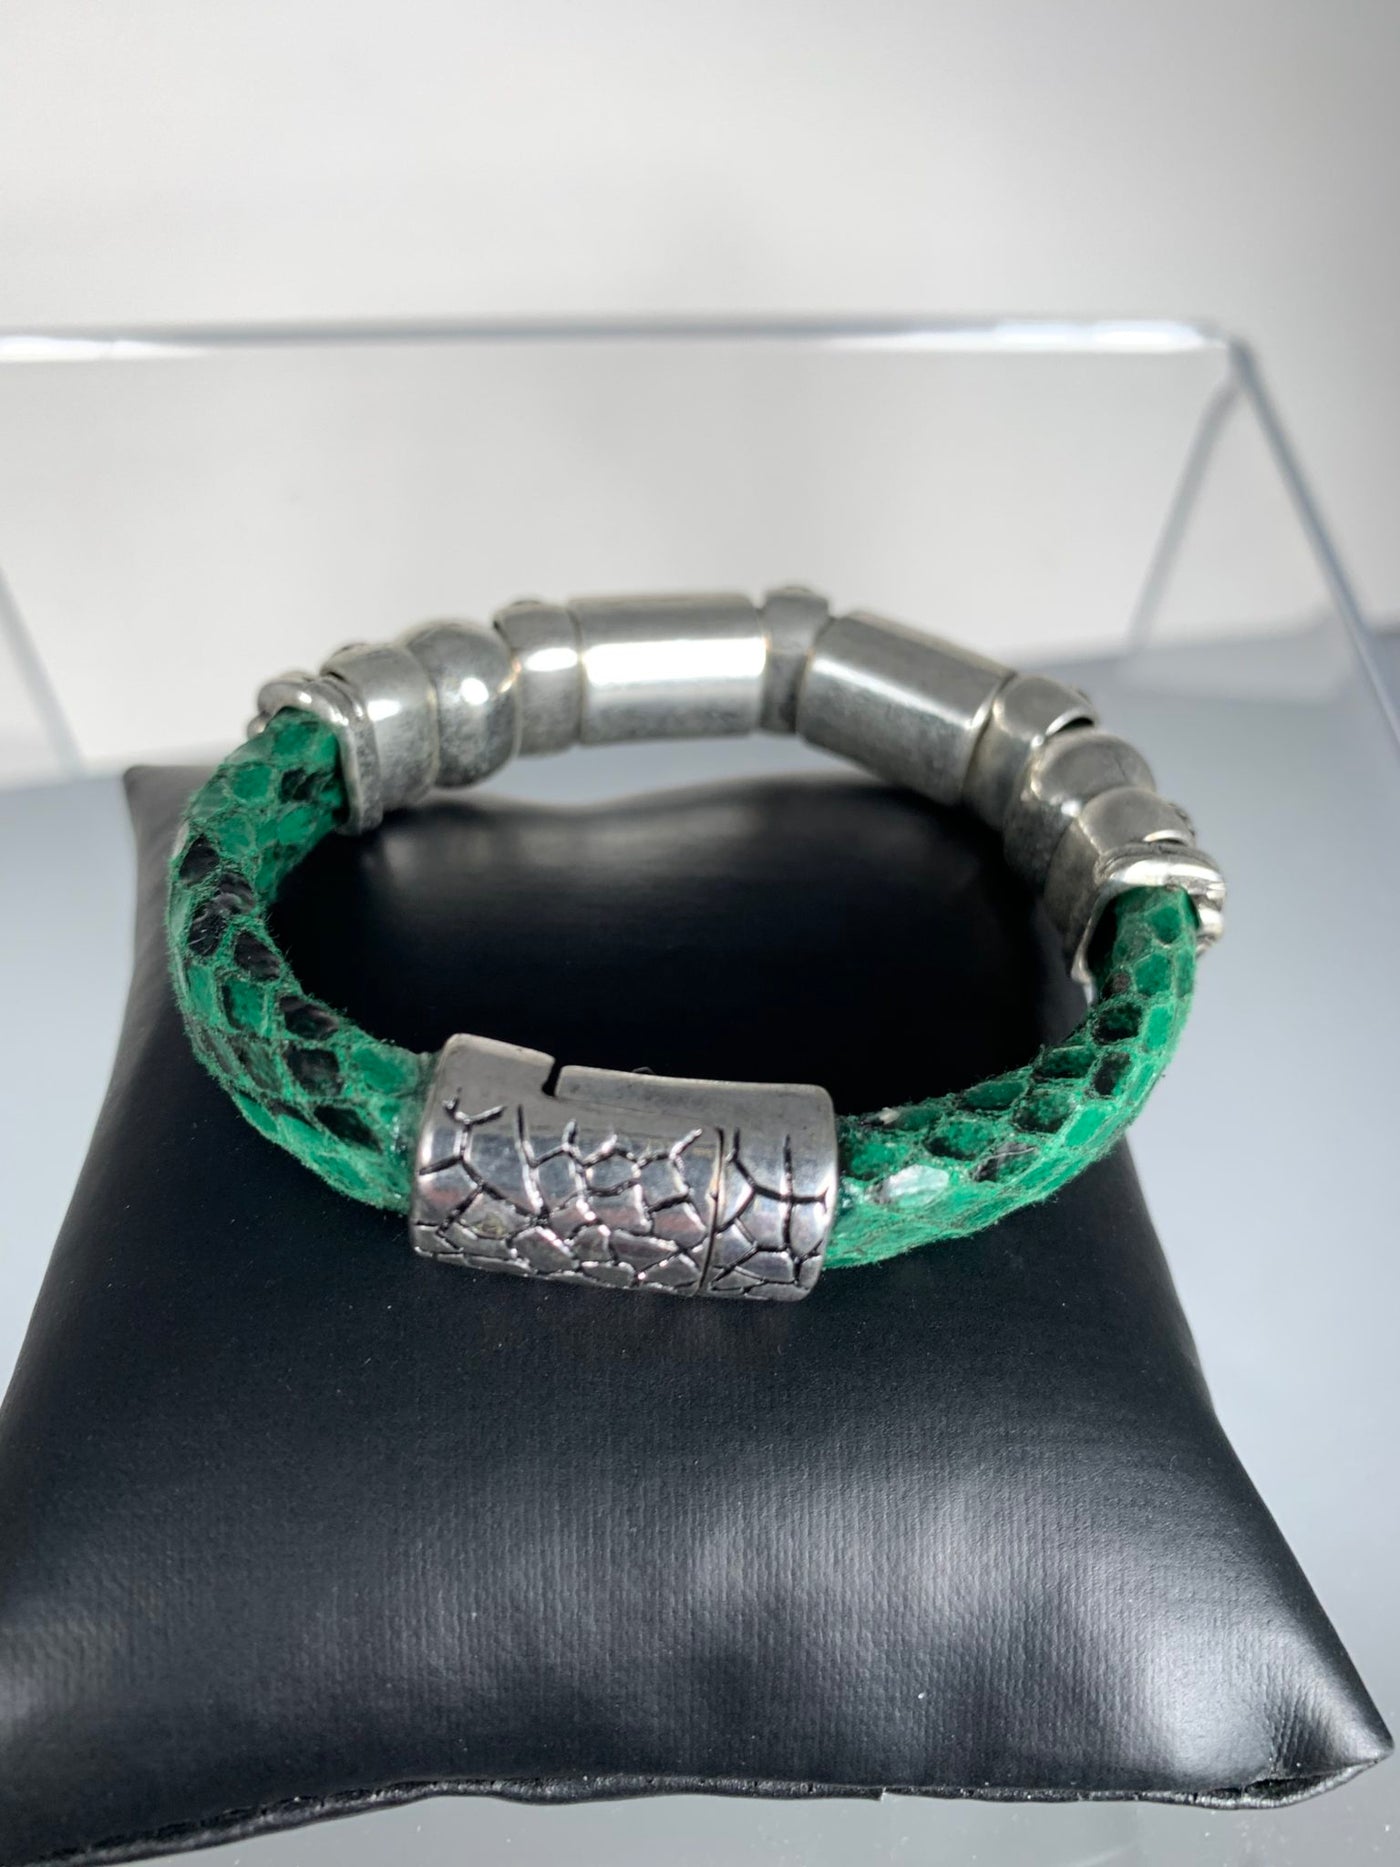 Green Faux Snake Skin Band Bracelet Featuring 3 "Little People"